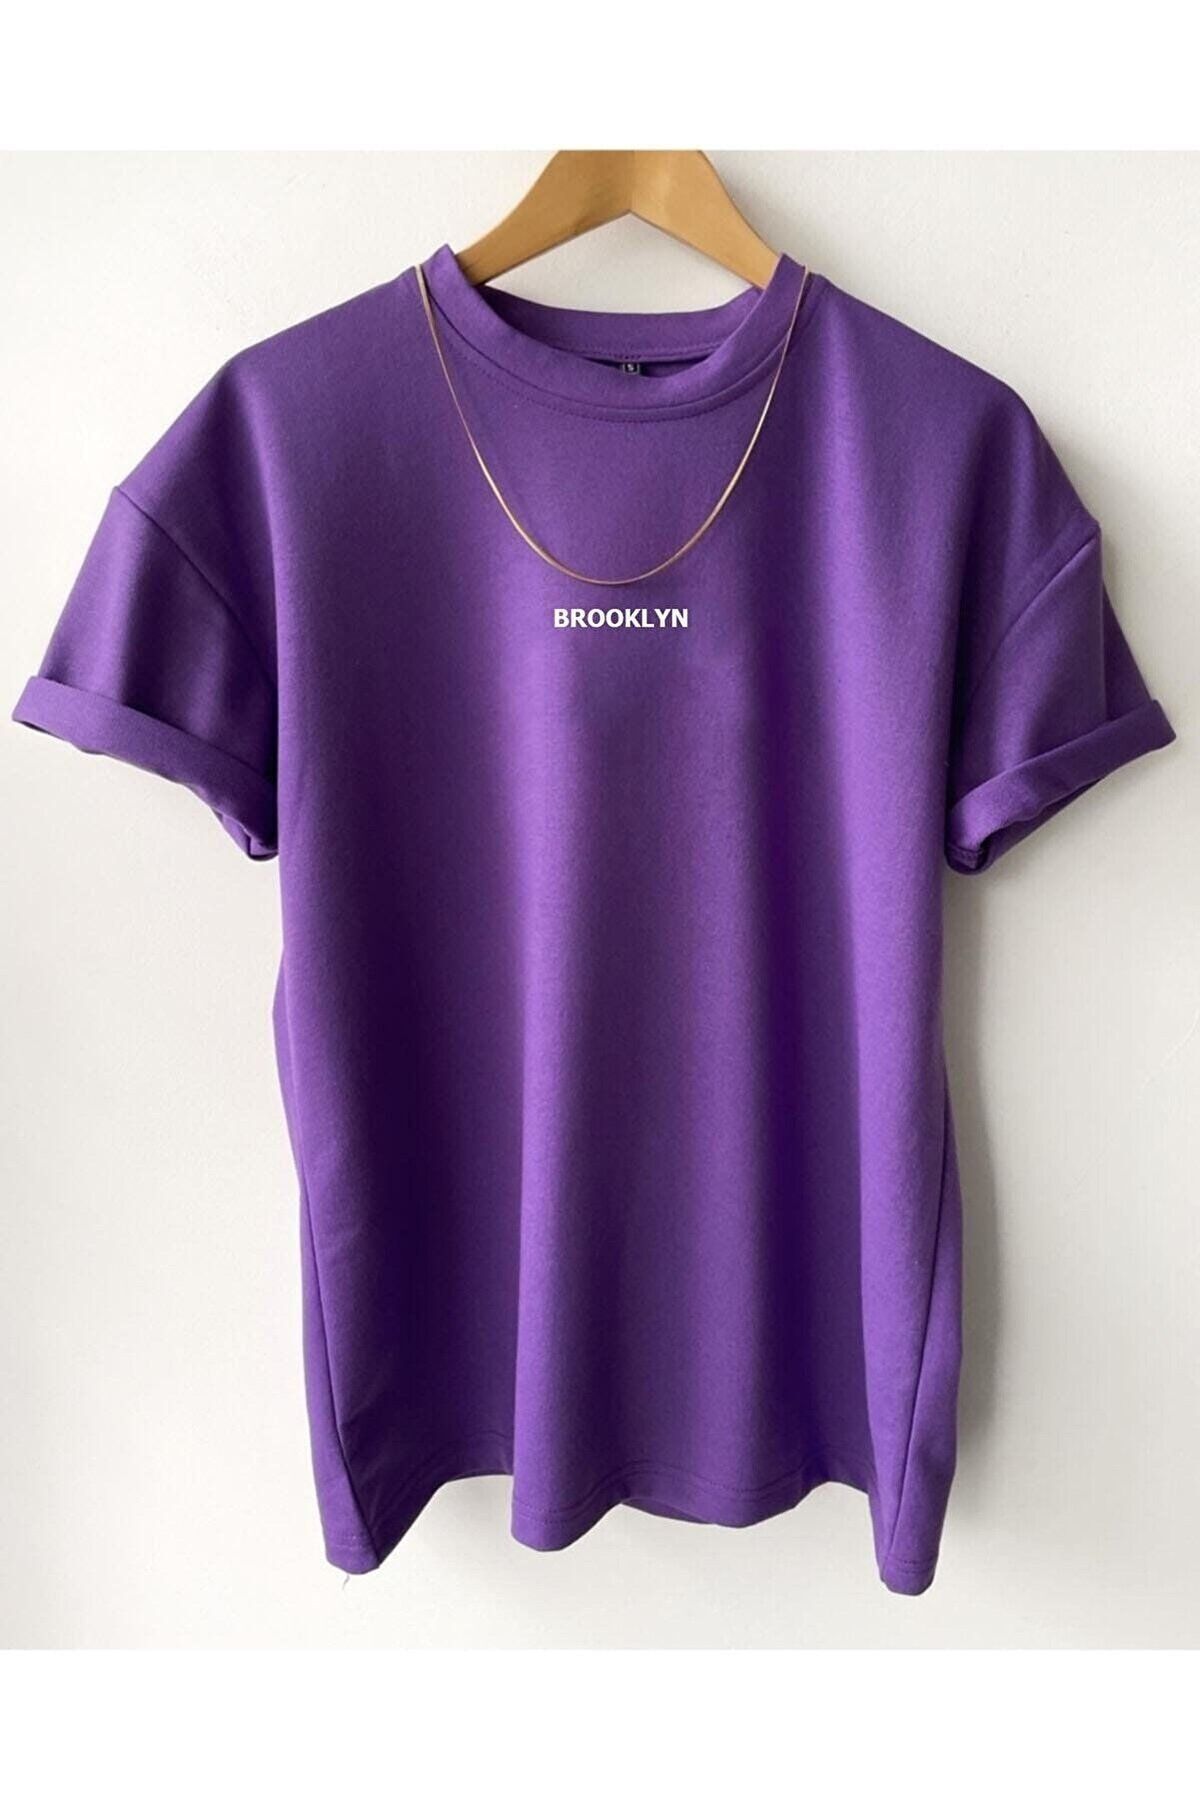 MOONBULL Unisex Brooklyn Baskılı Oversize T-shirt